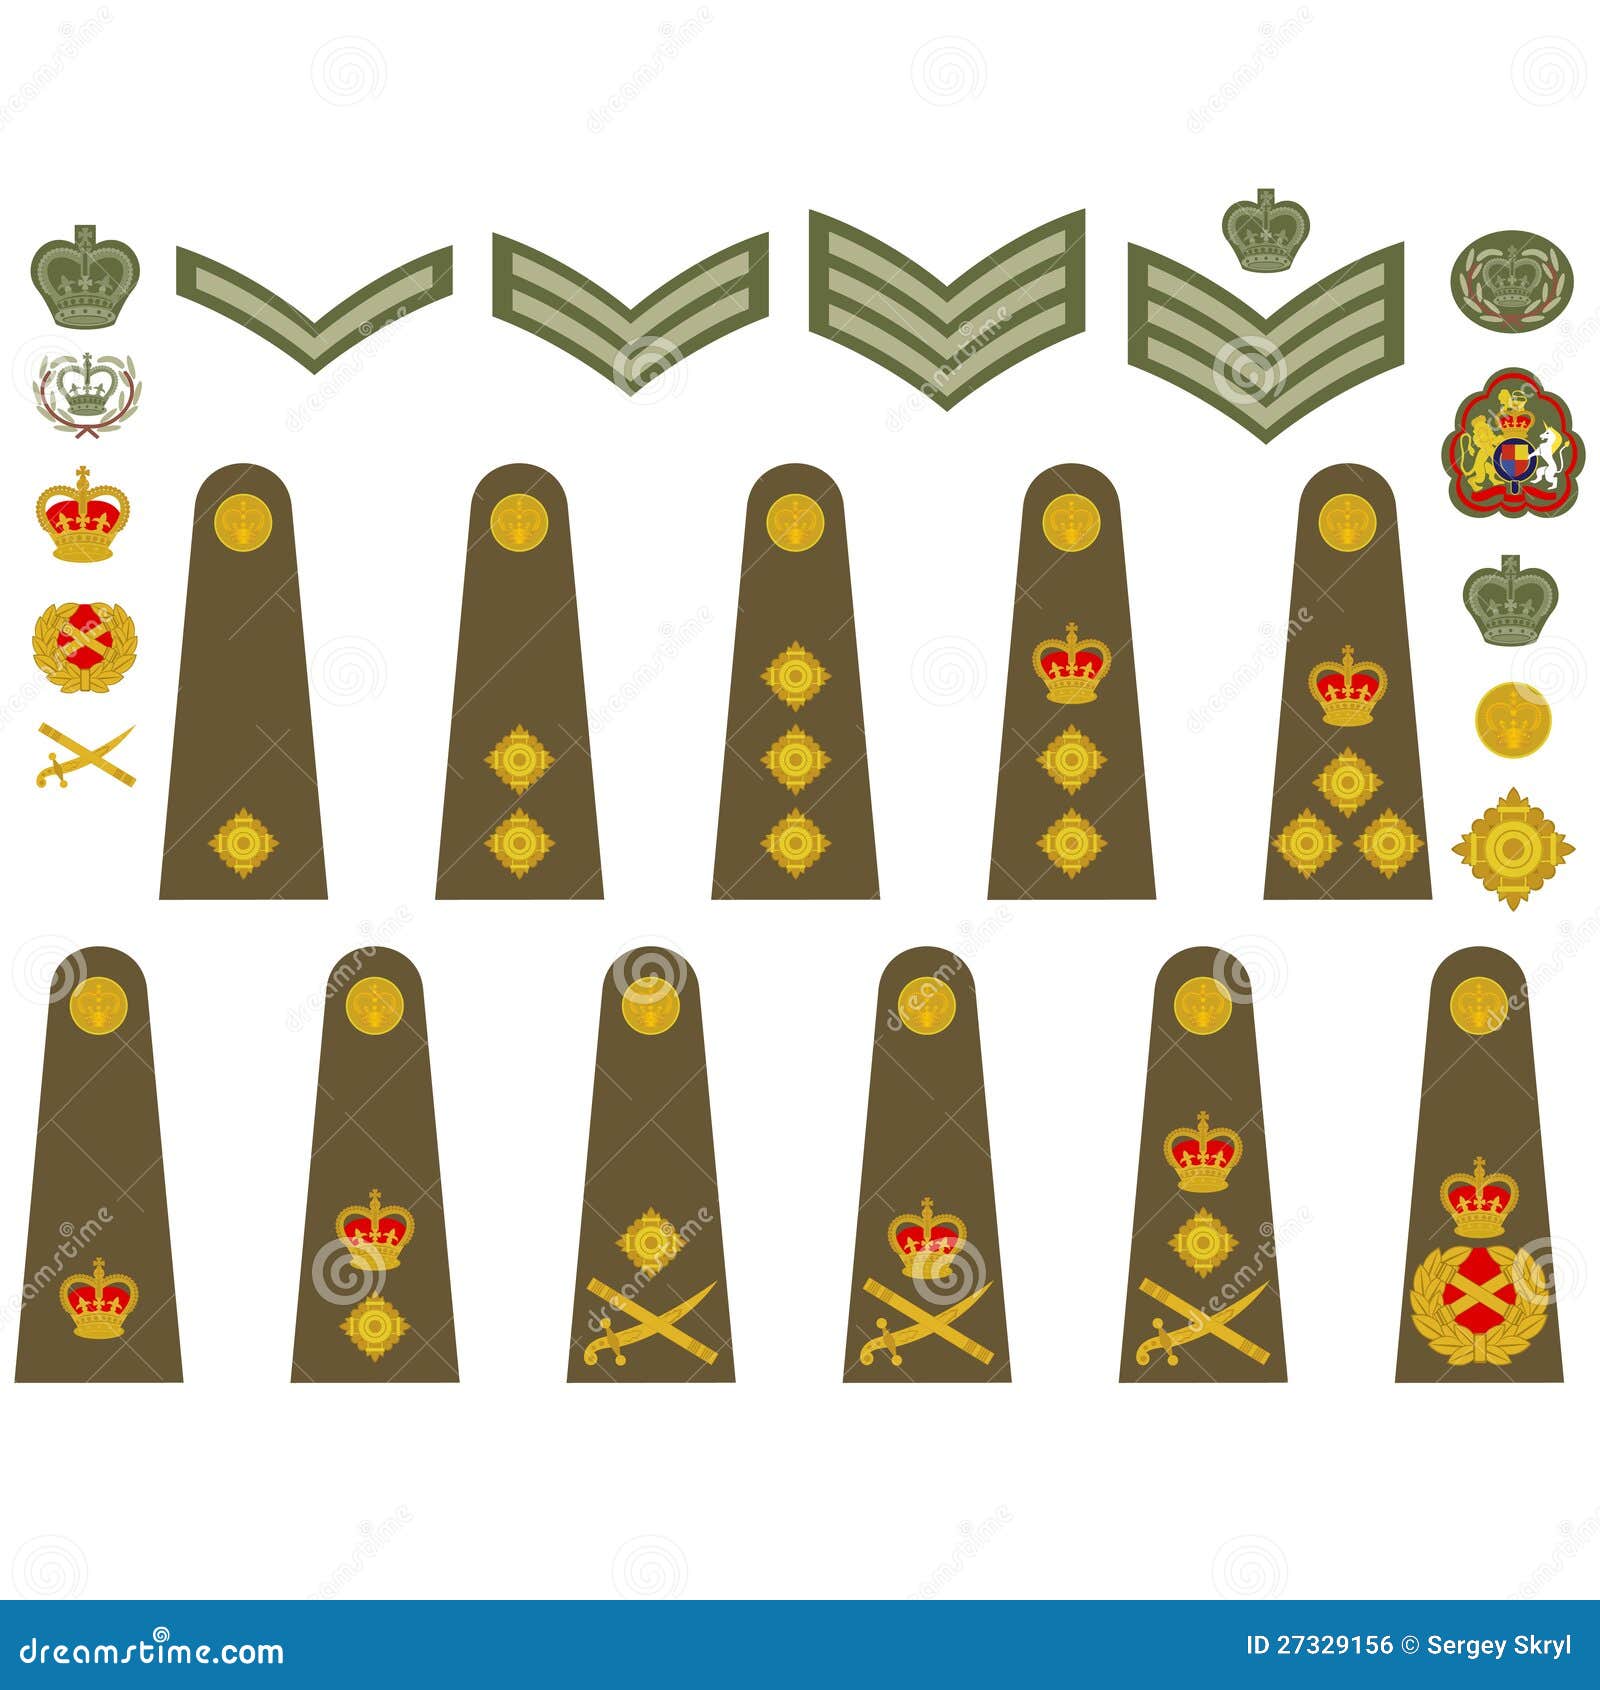 British Army Insignia Royalty Free Stock Image Image 27329156